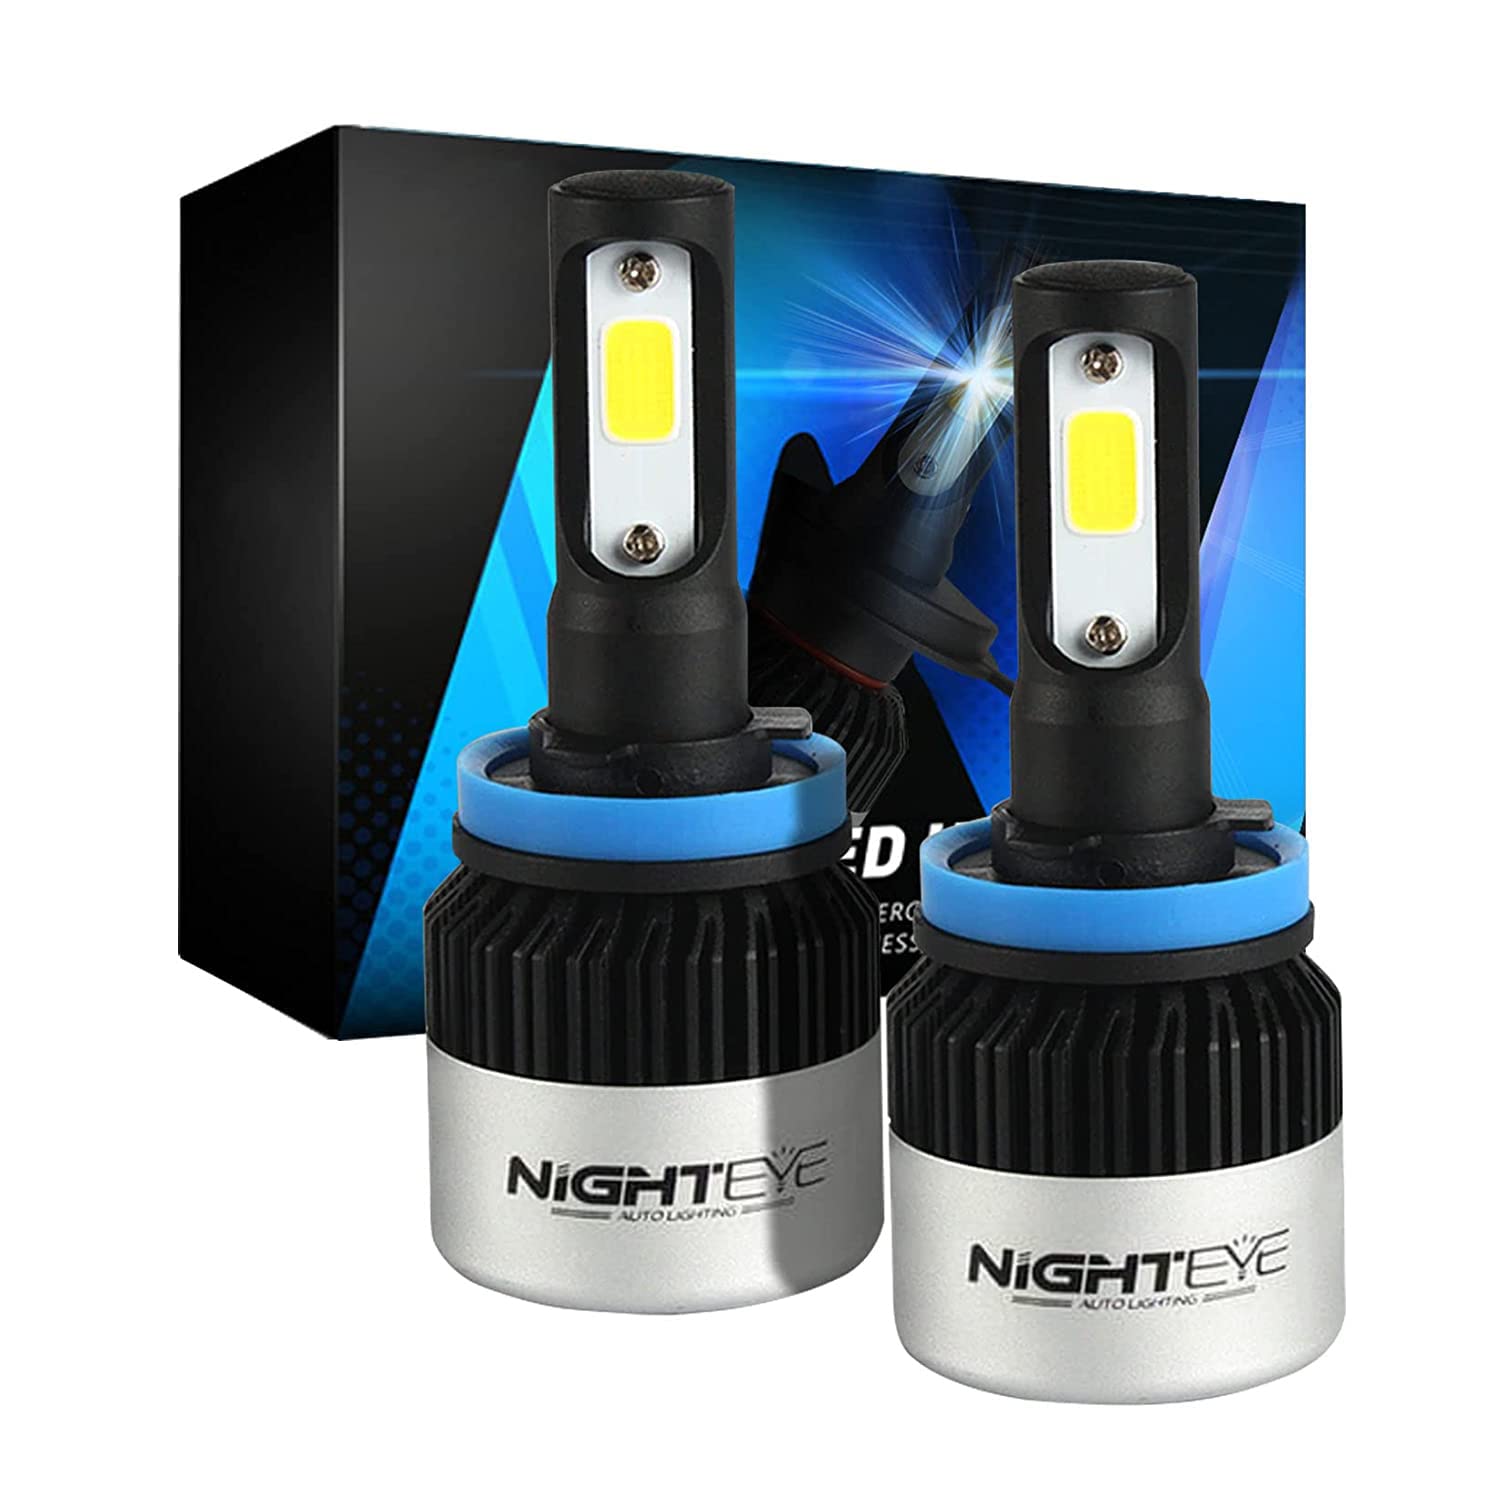 Buy ORIGINAL NIGHTEYE LED Headlight Bulb for Car and Bike INDIA Rs 1999/-   White, H4, 90W, 2 Bulbs - 9000 Lumens ULTRA BRIGHT, Type H4 –